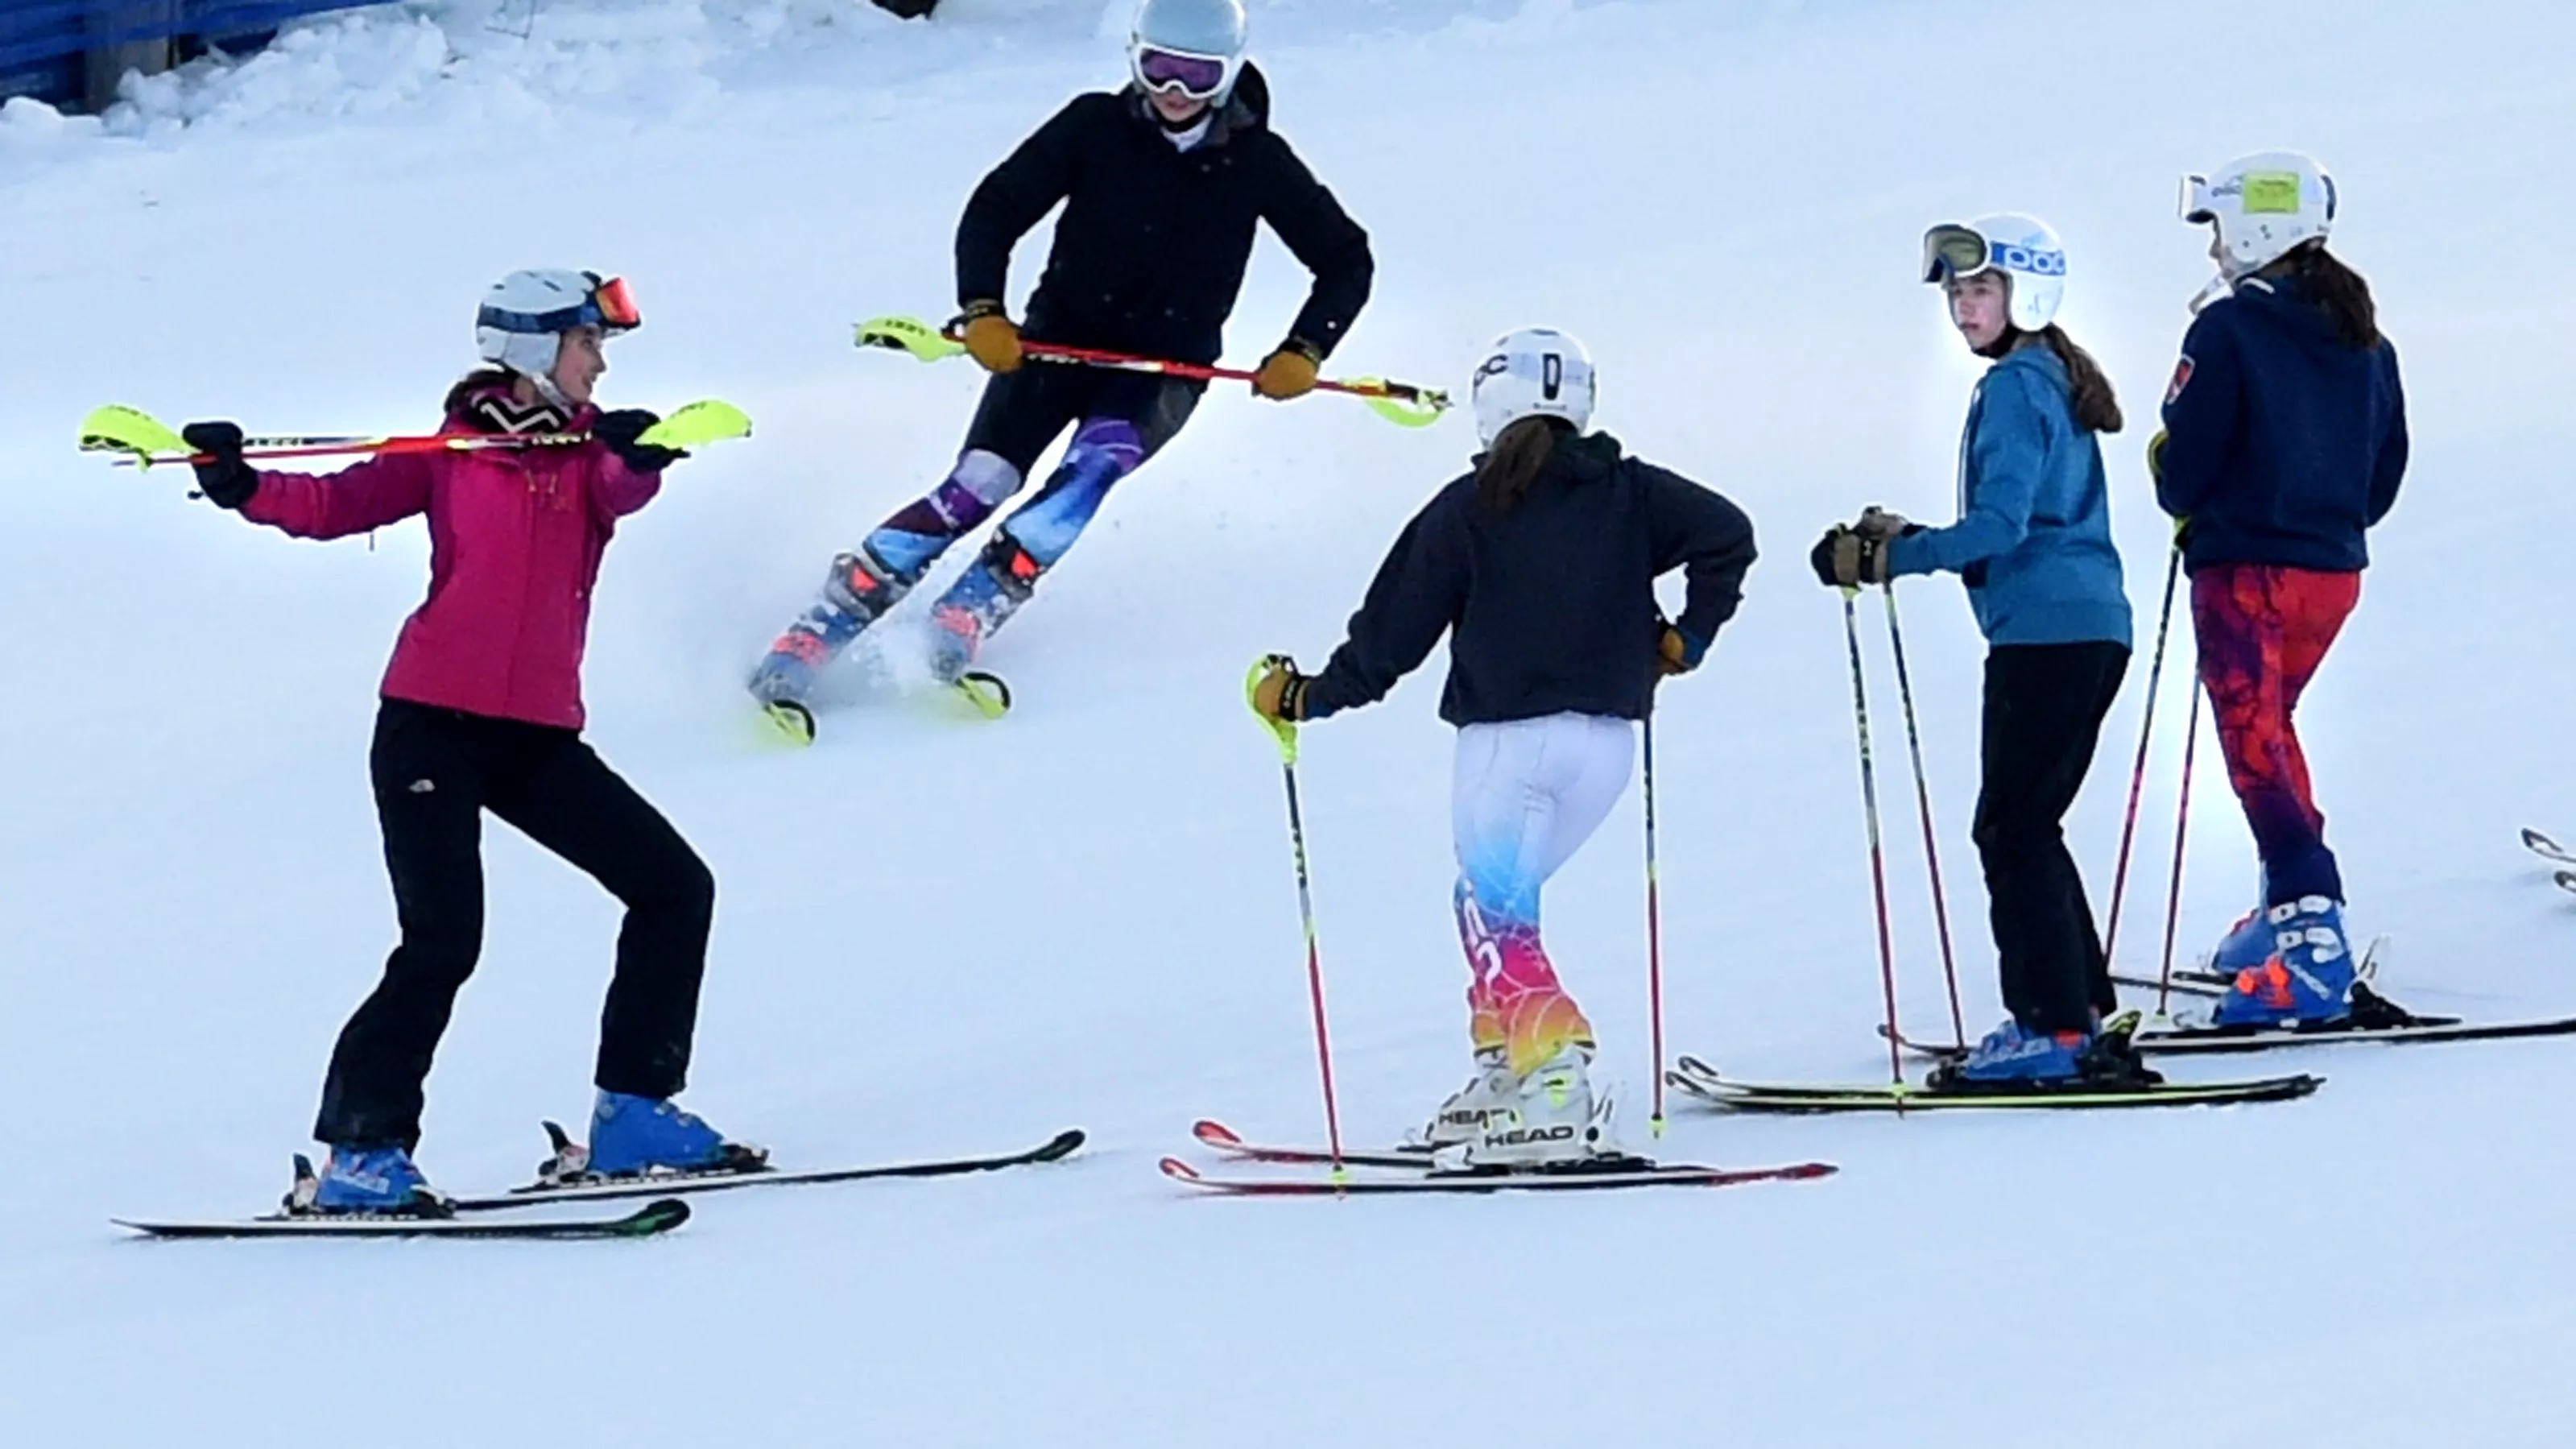 Ski & Snowboardschule Top in Germany, Europe | Snowboarding,Skiing - Rated 0.9